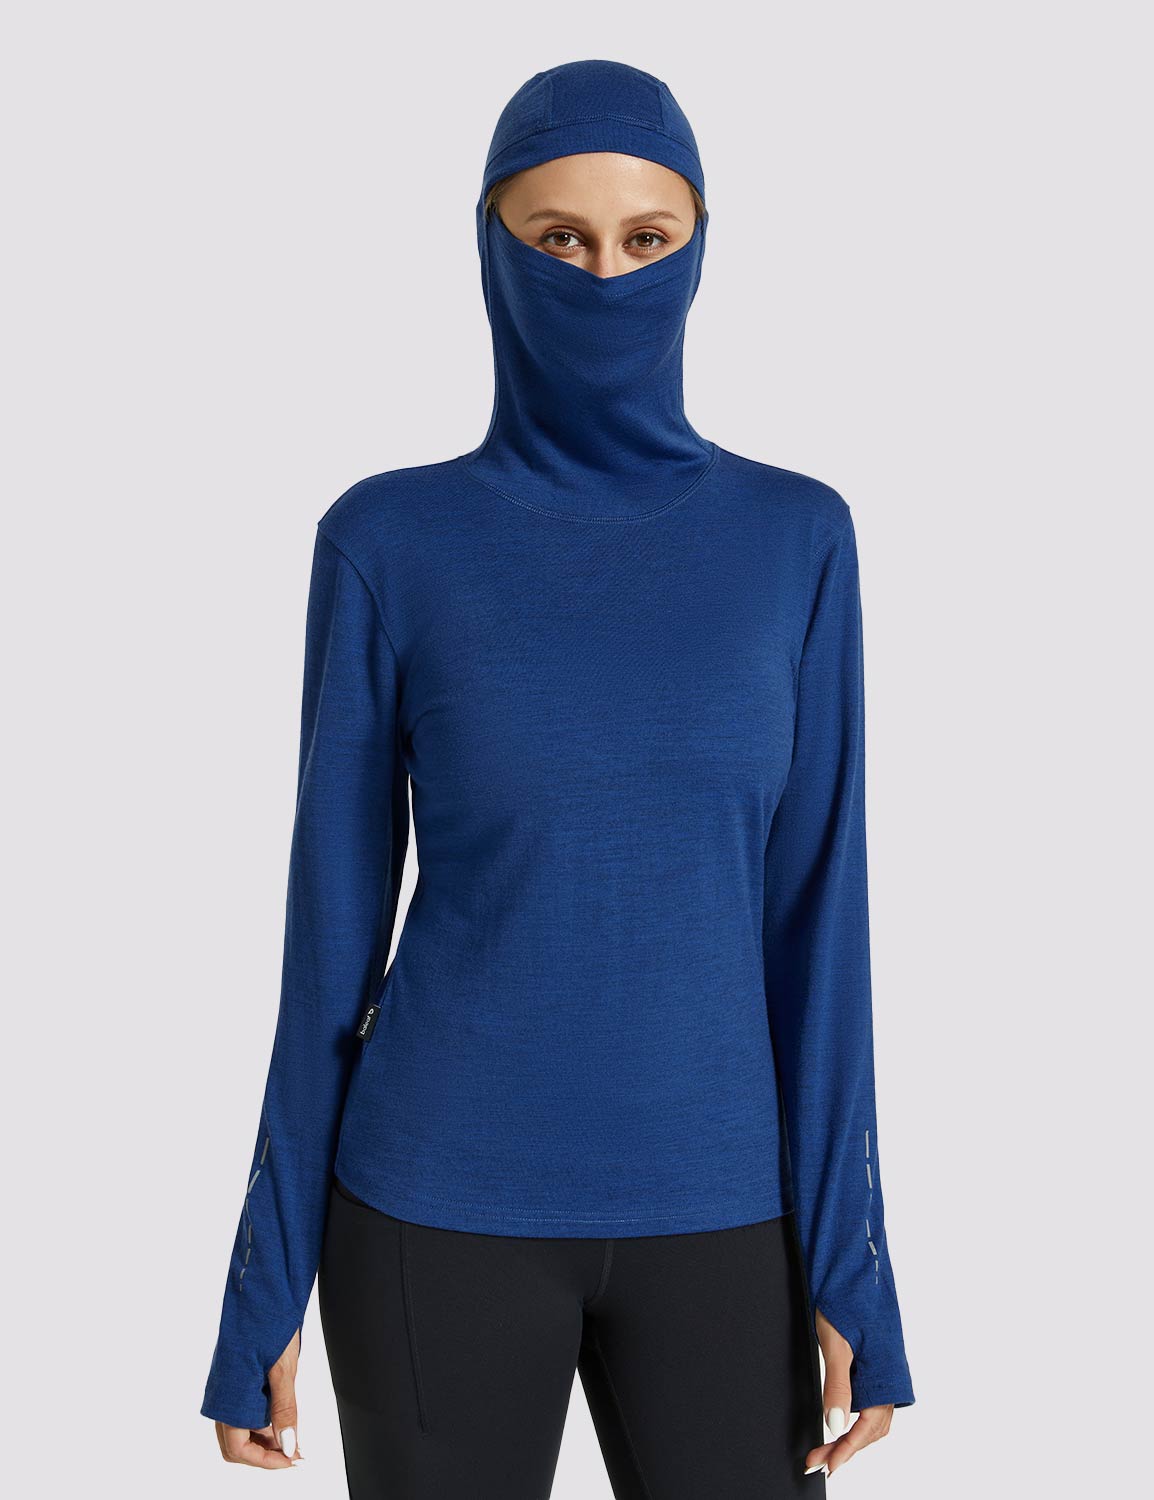 Baleaf Merino Wool Women's Hooded Base Layer Shirts Quartz Blue Front